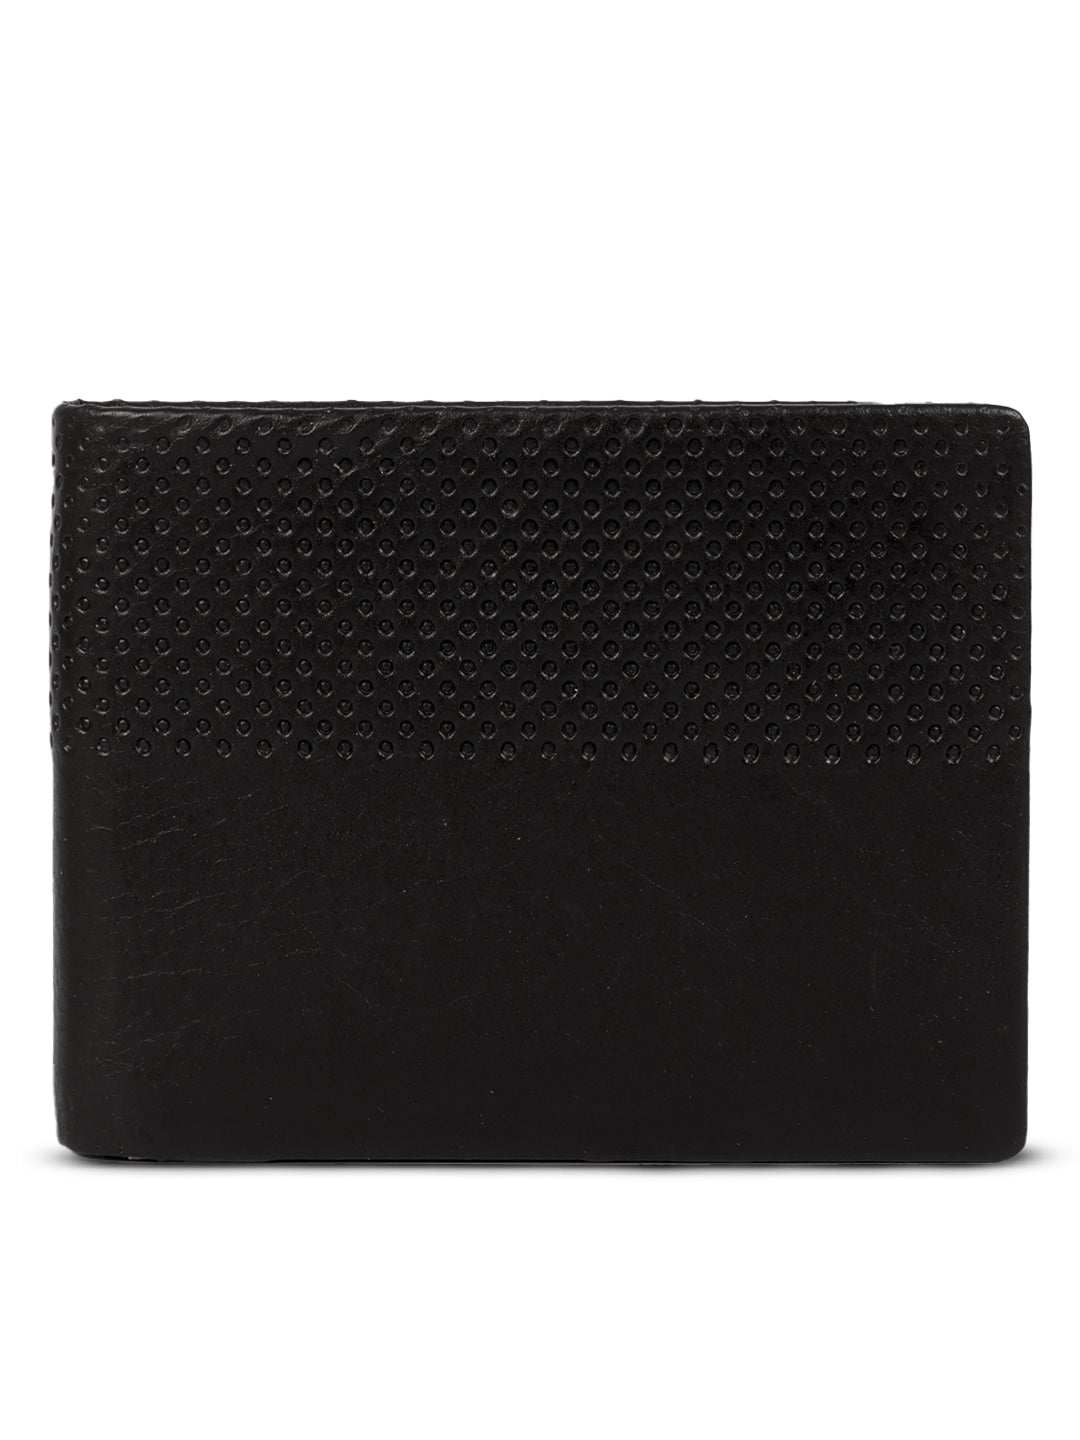 VK men´s leather key purse - black | Robel.shoes